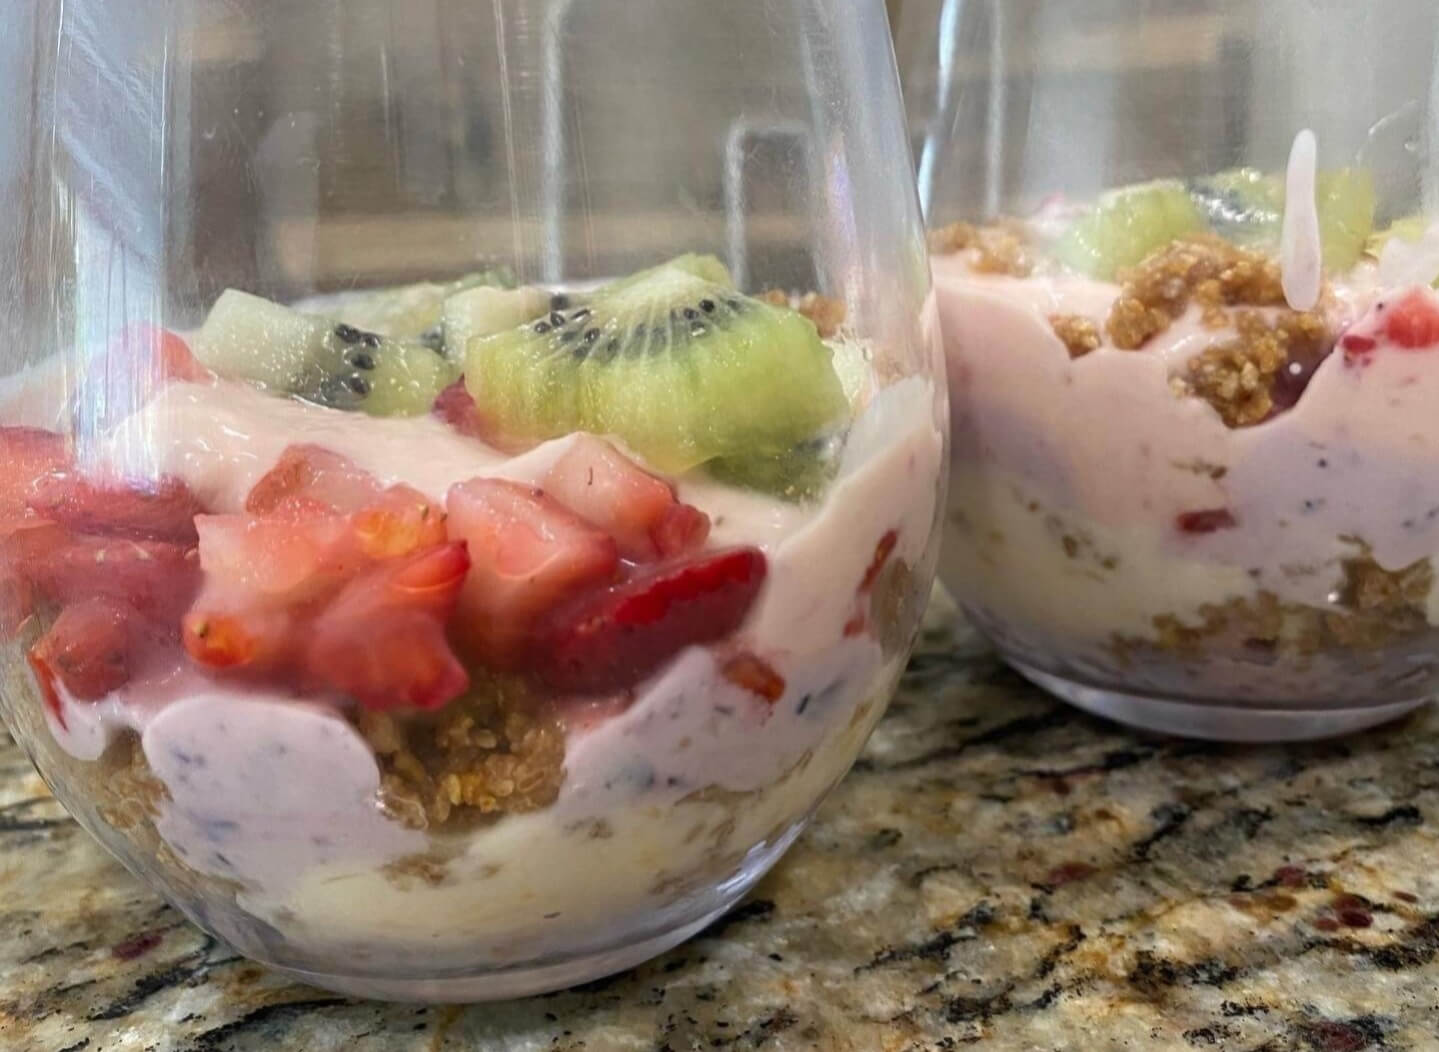 Two fruit 'n' cereal rainbow yogurt parfaits with strawberry and kiwi